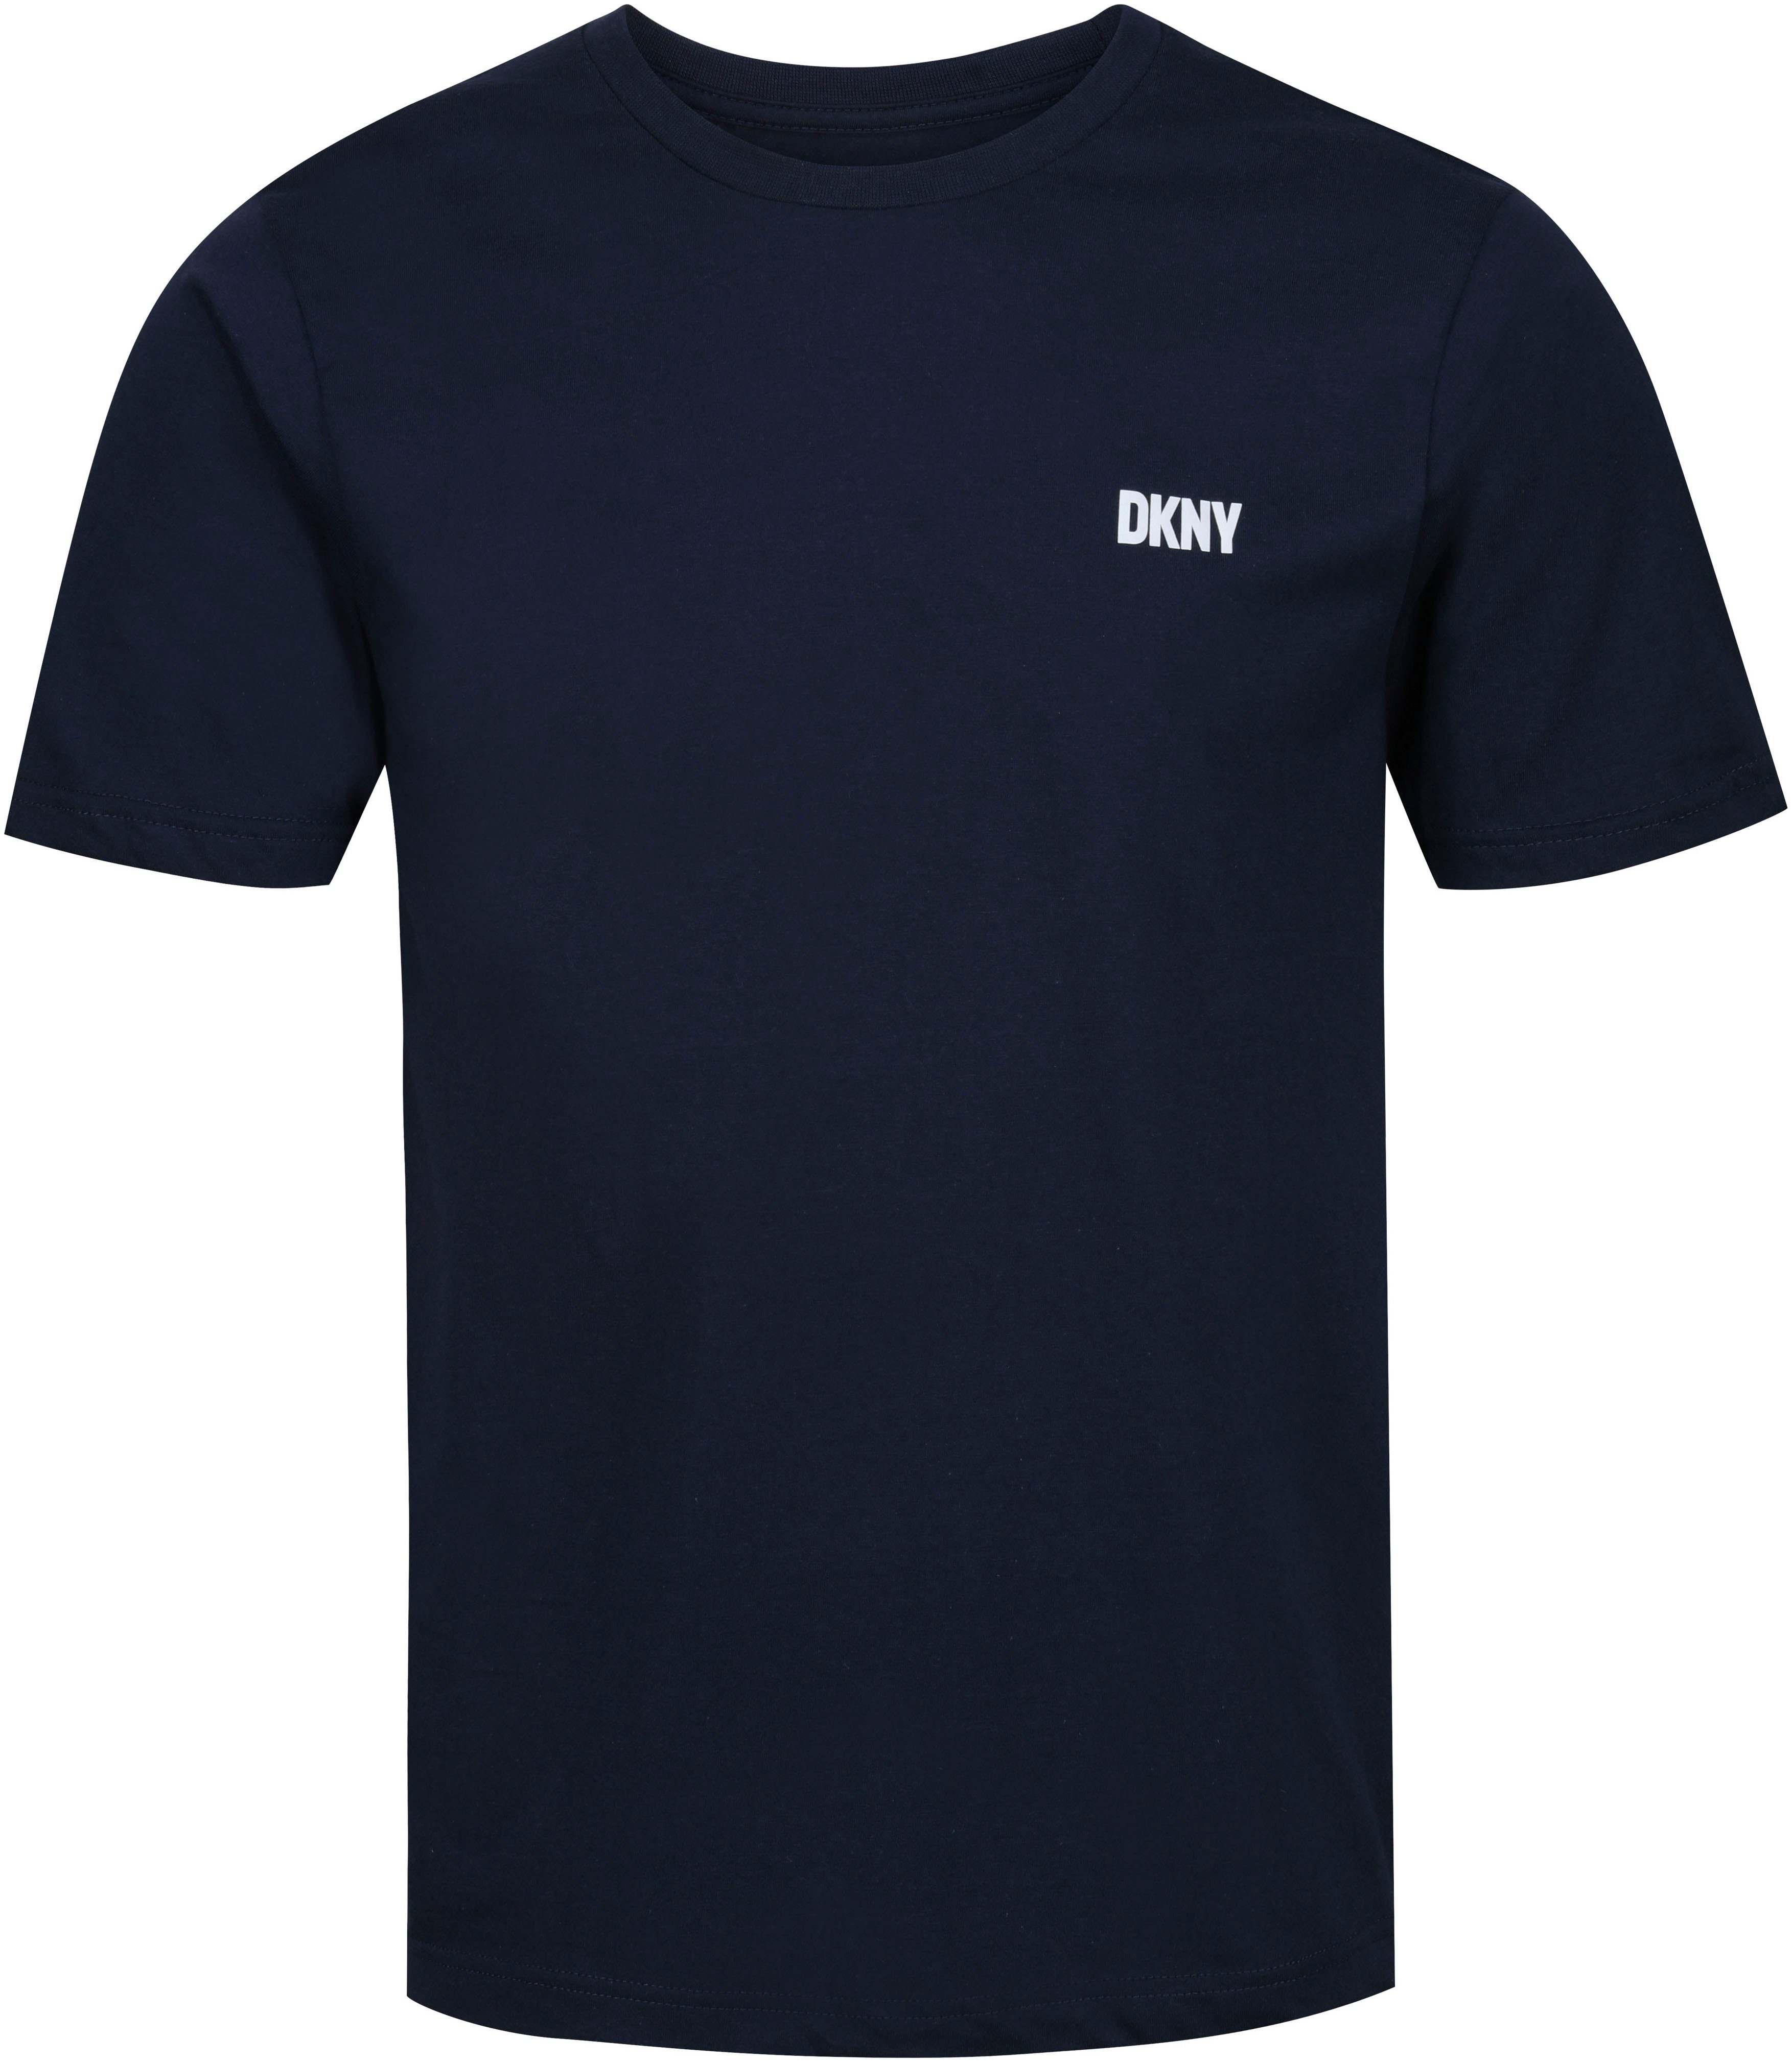 DKNY olive/charco T-Shirt GIANTS